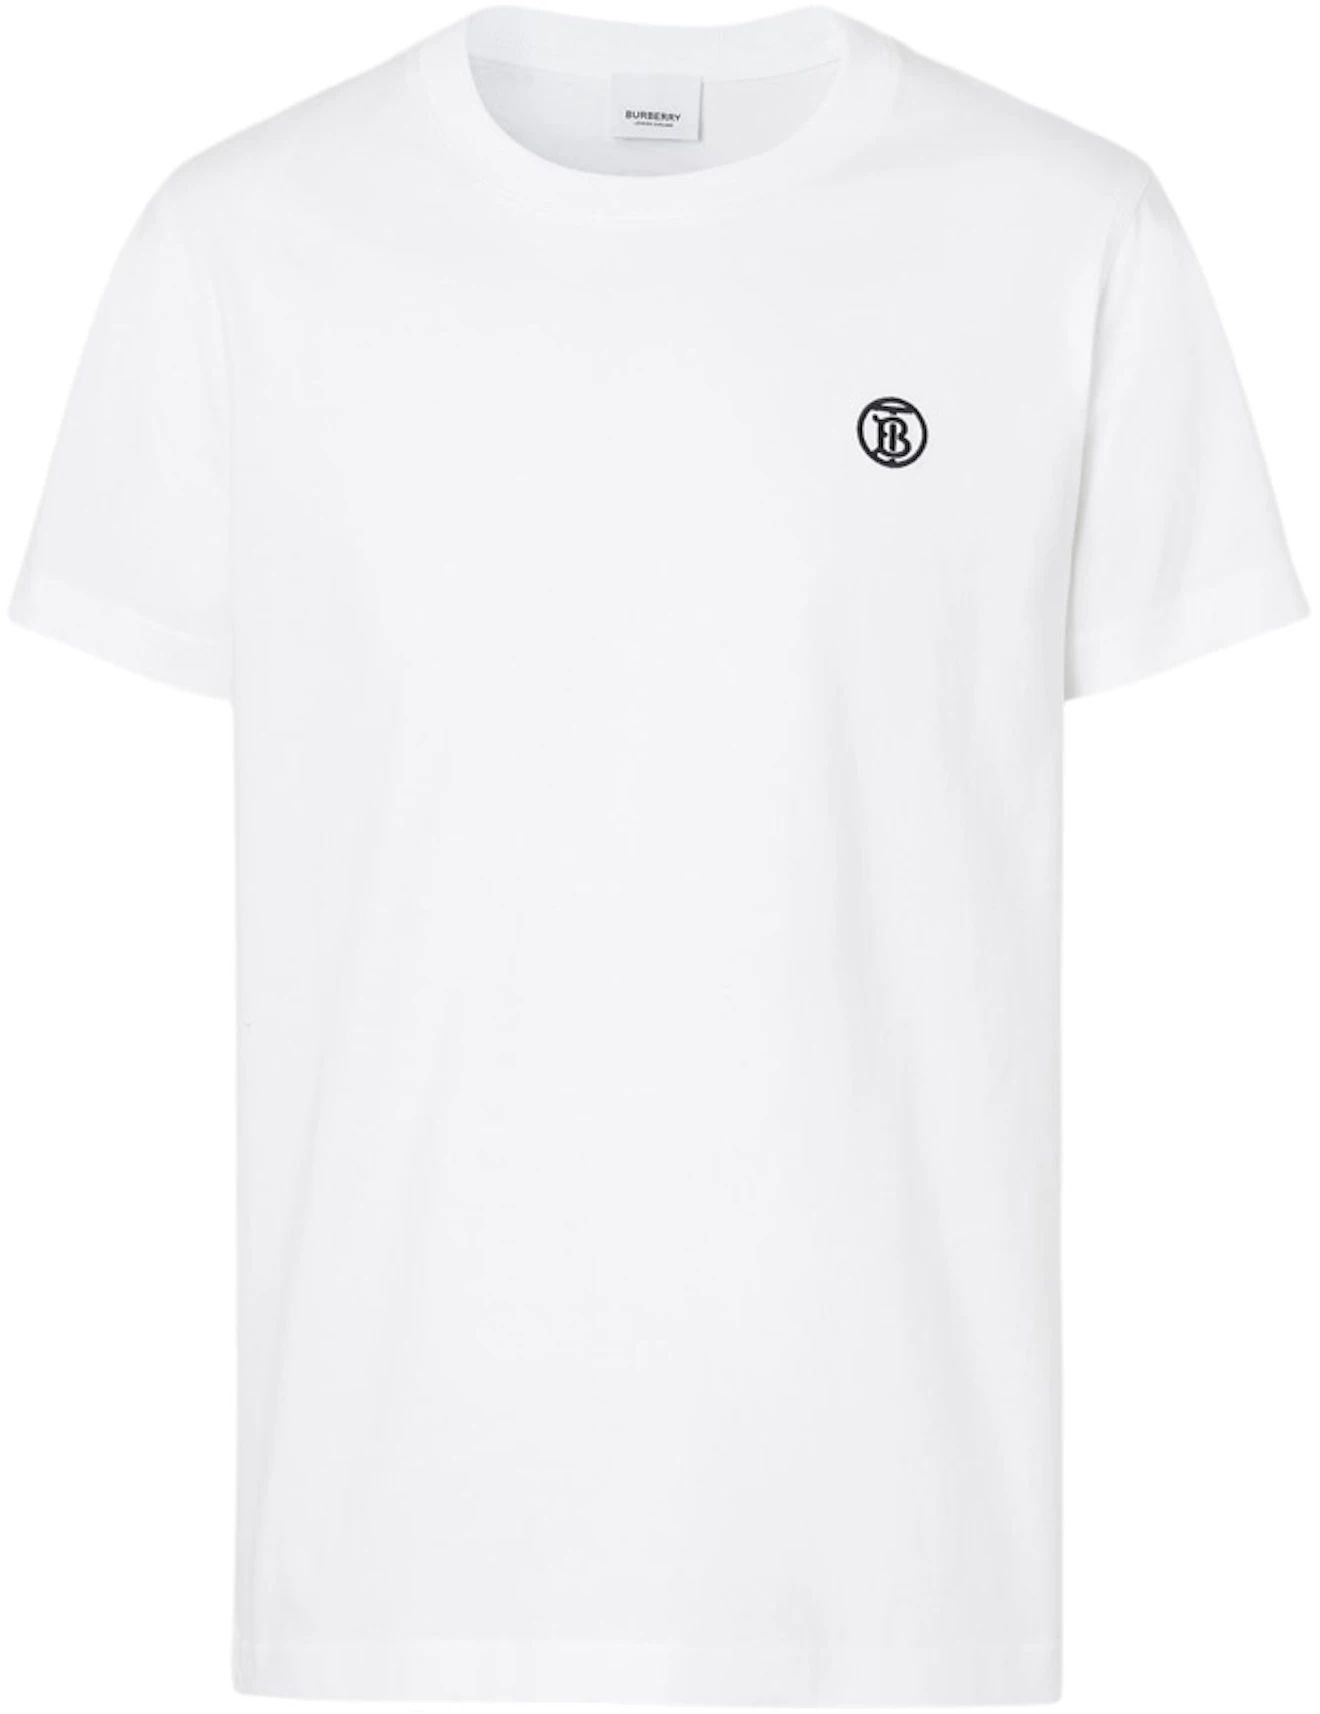 Burberry Monogram Motif Cotton T-shirt White/Black - SS22 - US